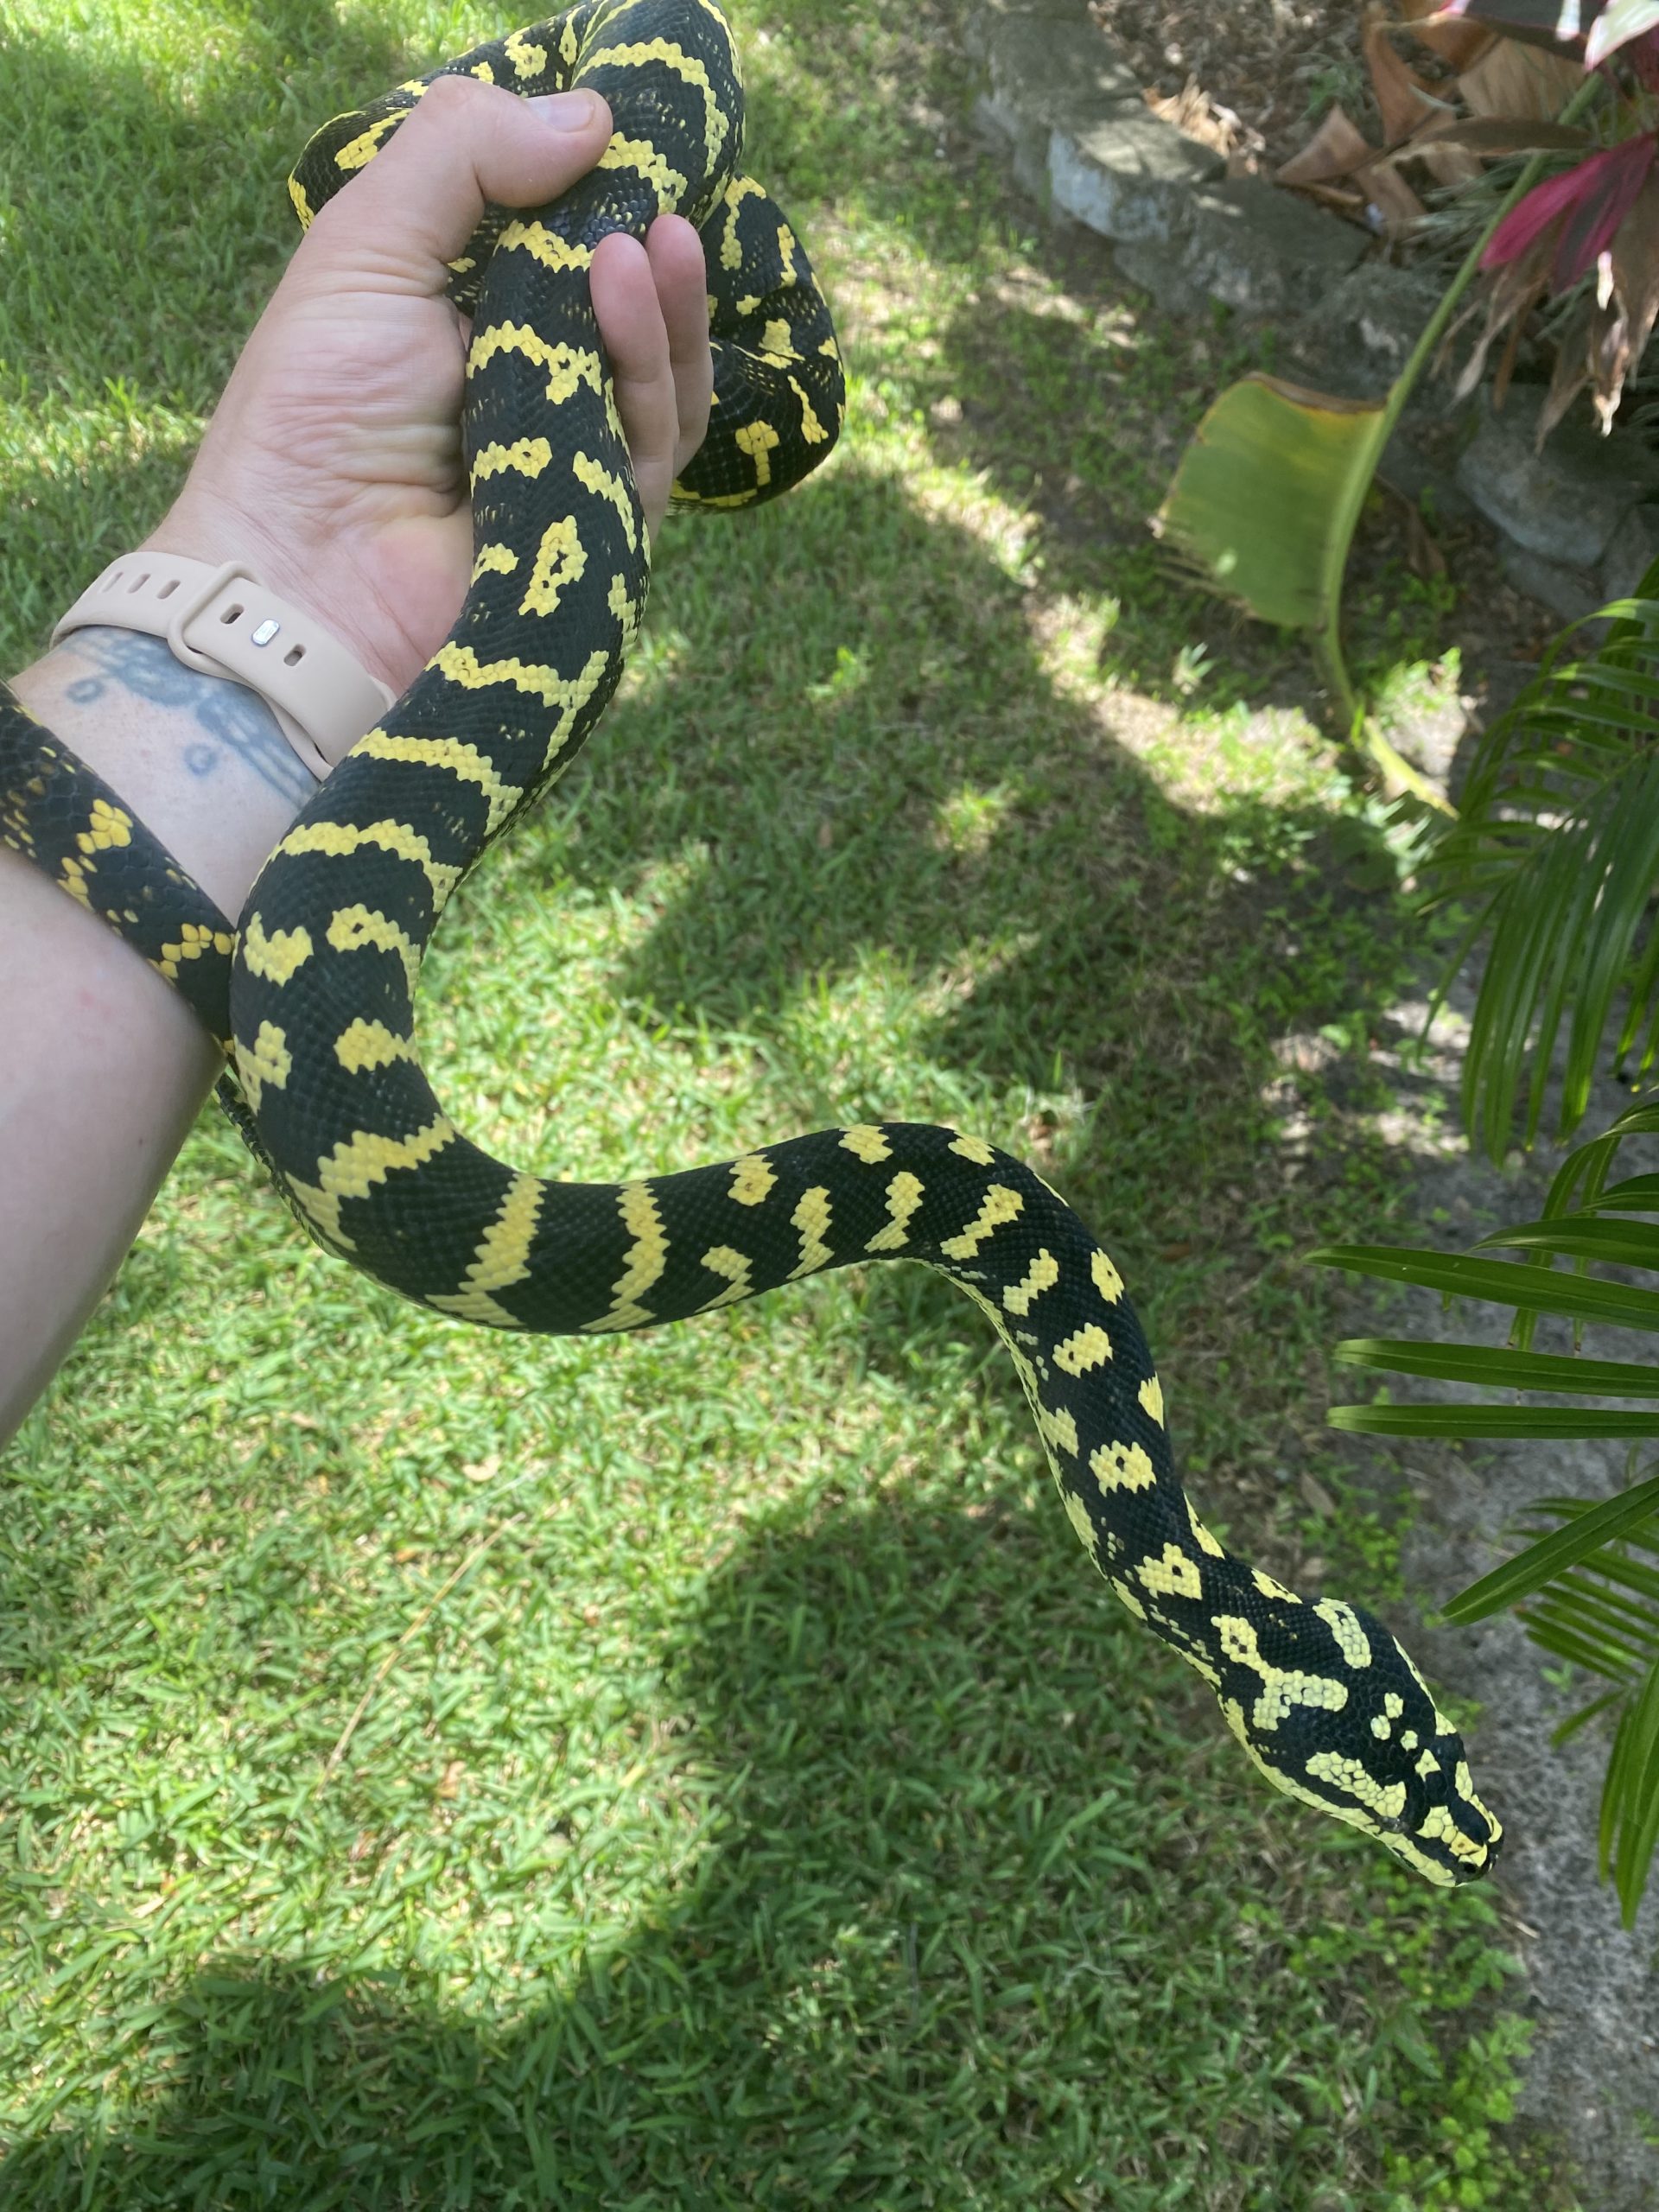 Jungle Carpet Pythons for Sale